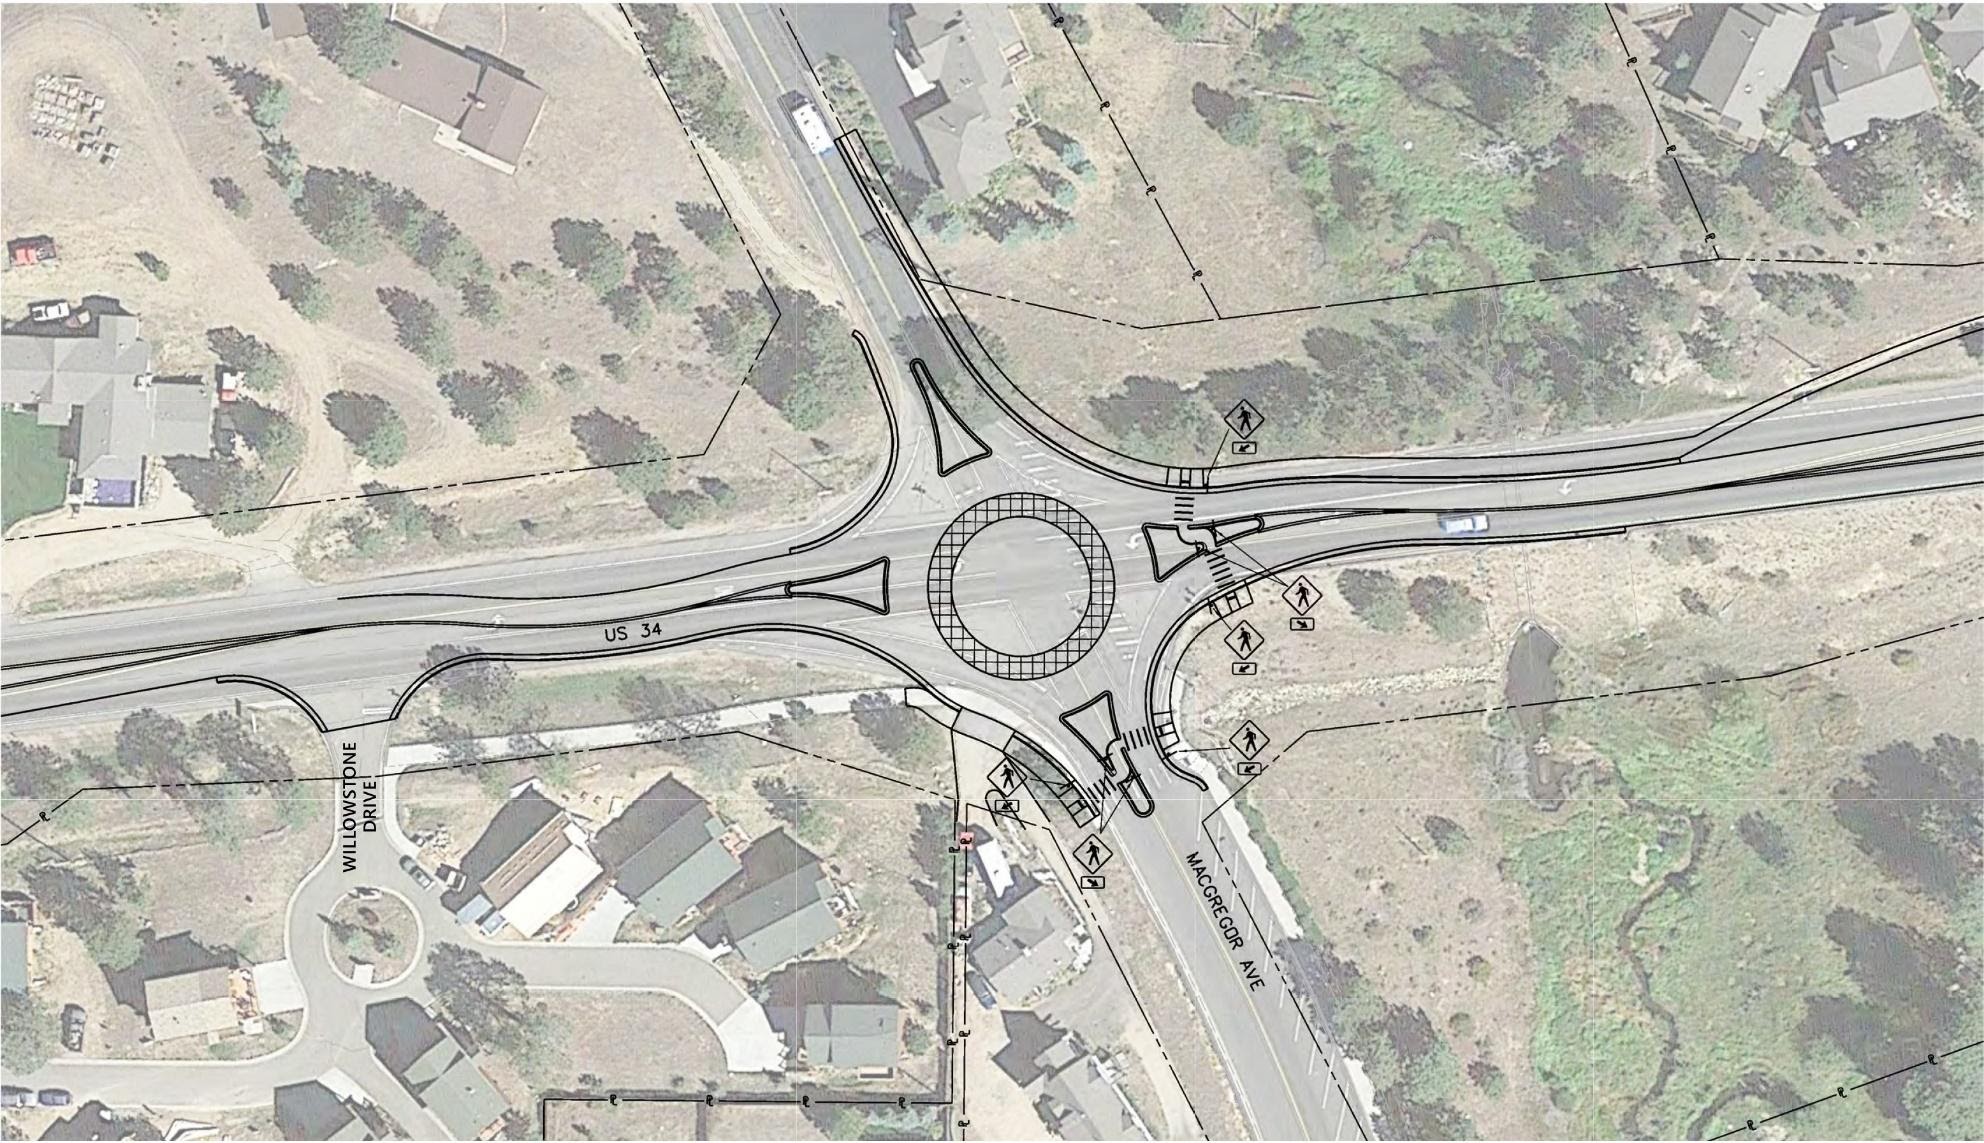 macgregor roundabout.jpg detail image